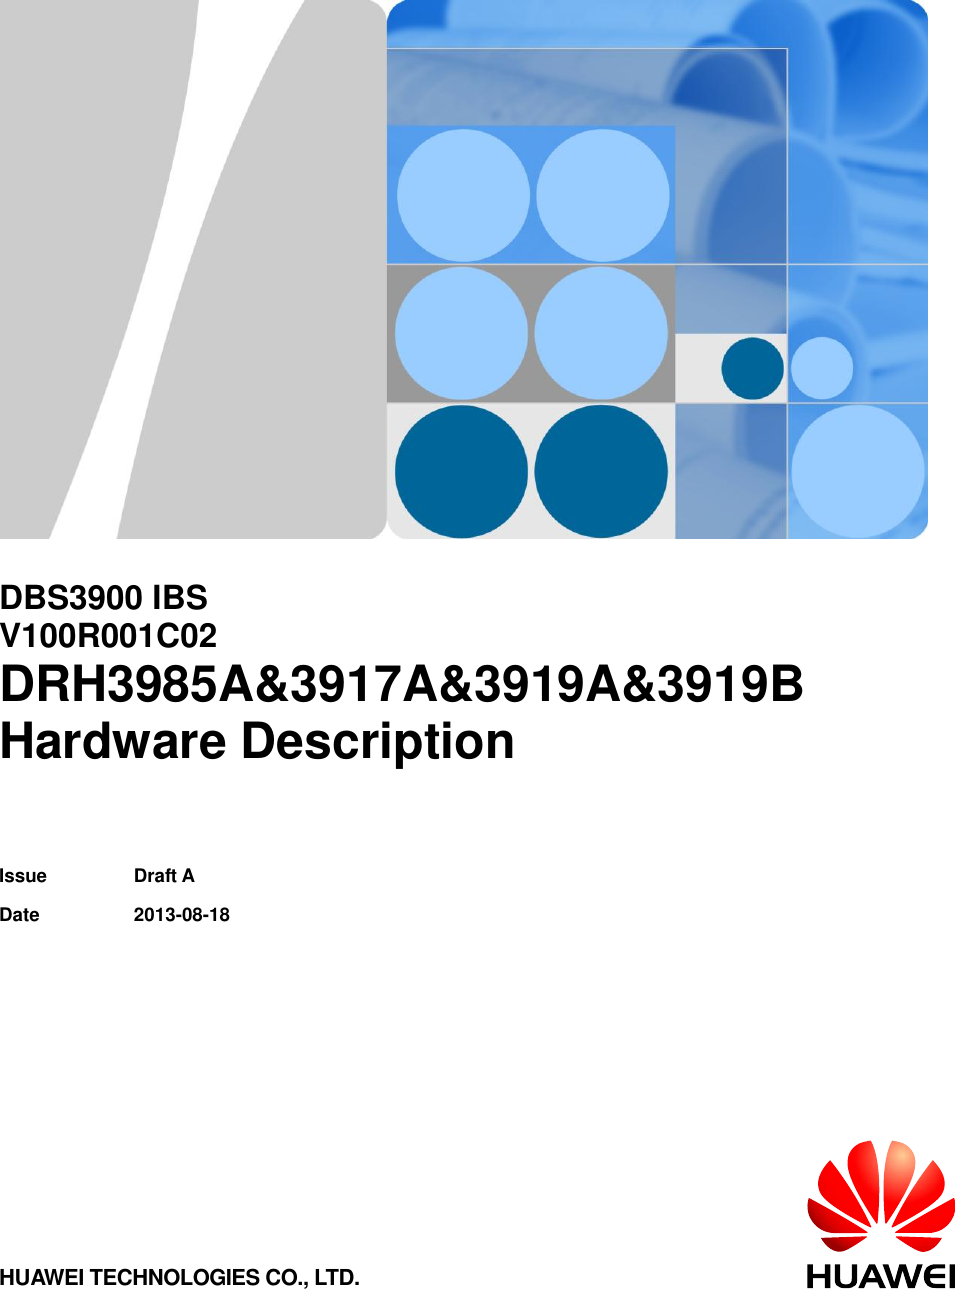          DBS3900 IBS V100R001C02 DRH3985A&amp;3917A&amp;3919A&amp;3919B   Hardware Description   Issue Draft A   Date 2013-08-18 HUAWEI TECHNOLOGIES CO., LTD. 